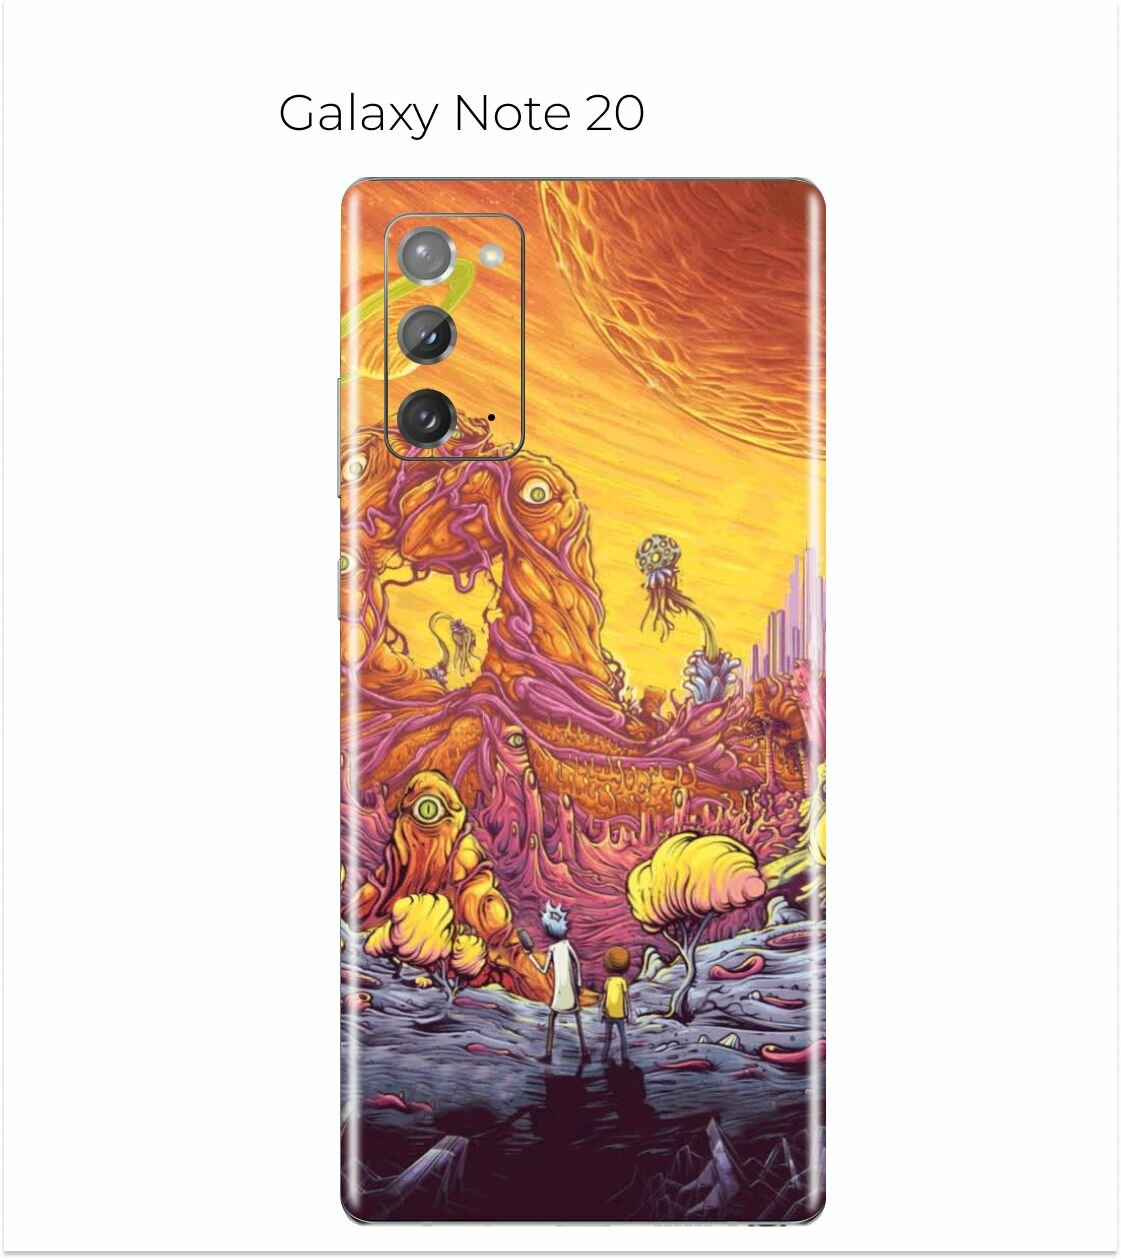 Гидрогелевая пленка на Samsung Galaxy Note 20 на заднюю панель защитная пленка для Galaxy Note 20